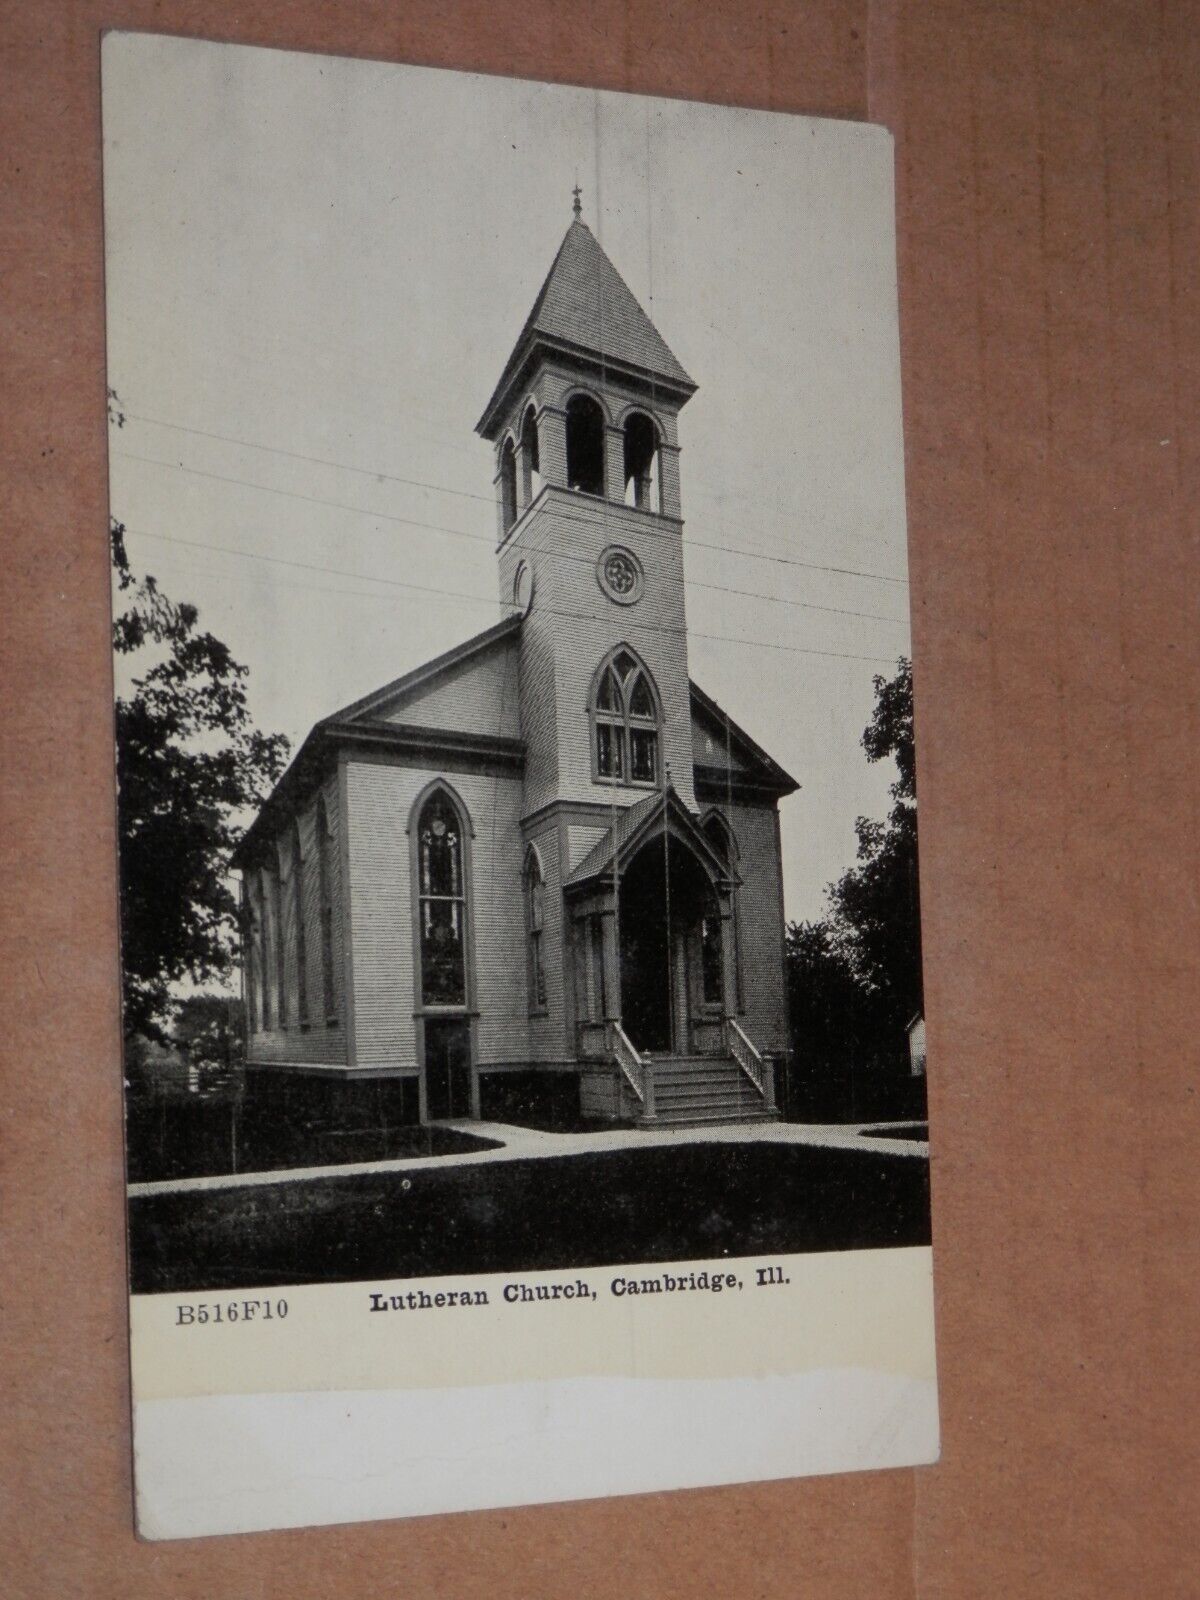 CAMBRIDGE IL - 1907-1915 ERA POSTCARD - LUTHERAN CHURCH - HENRY COUNTY